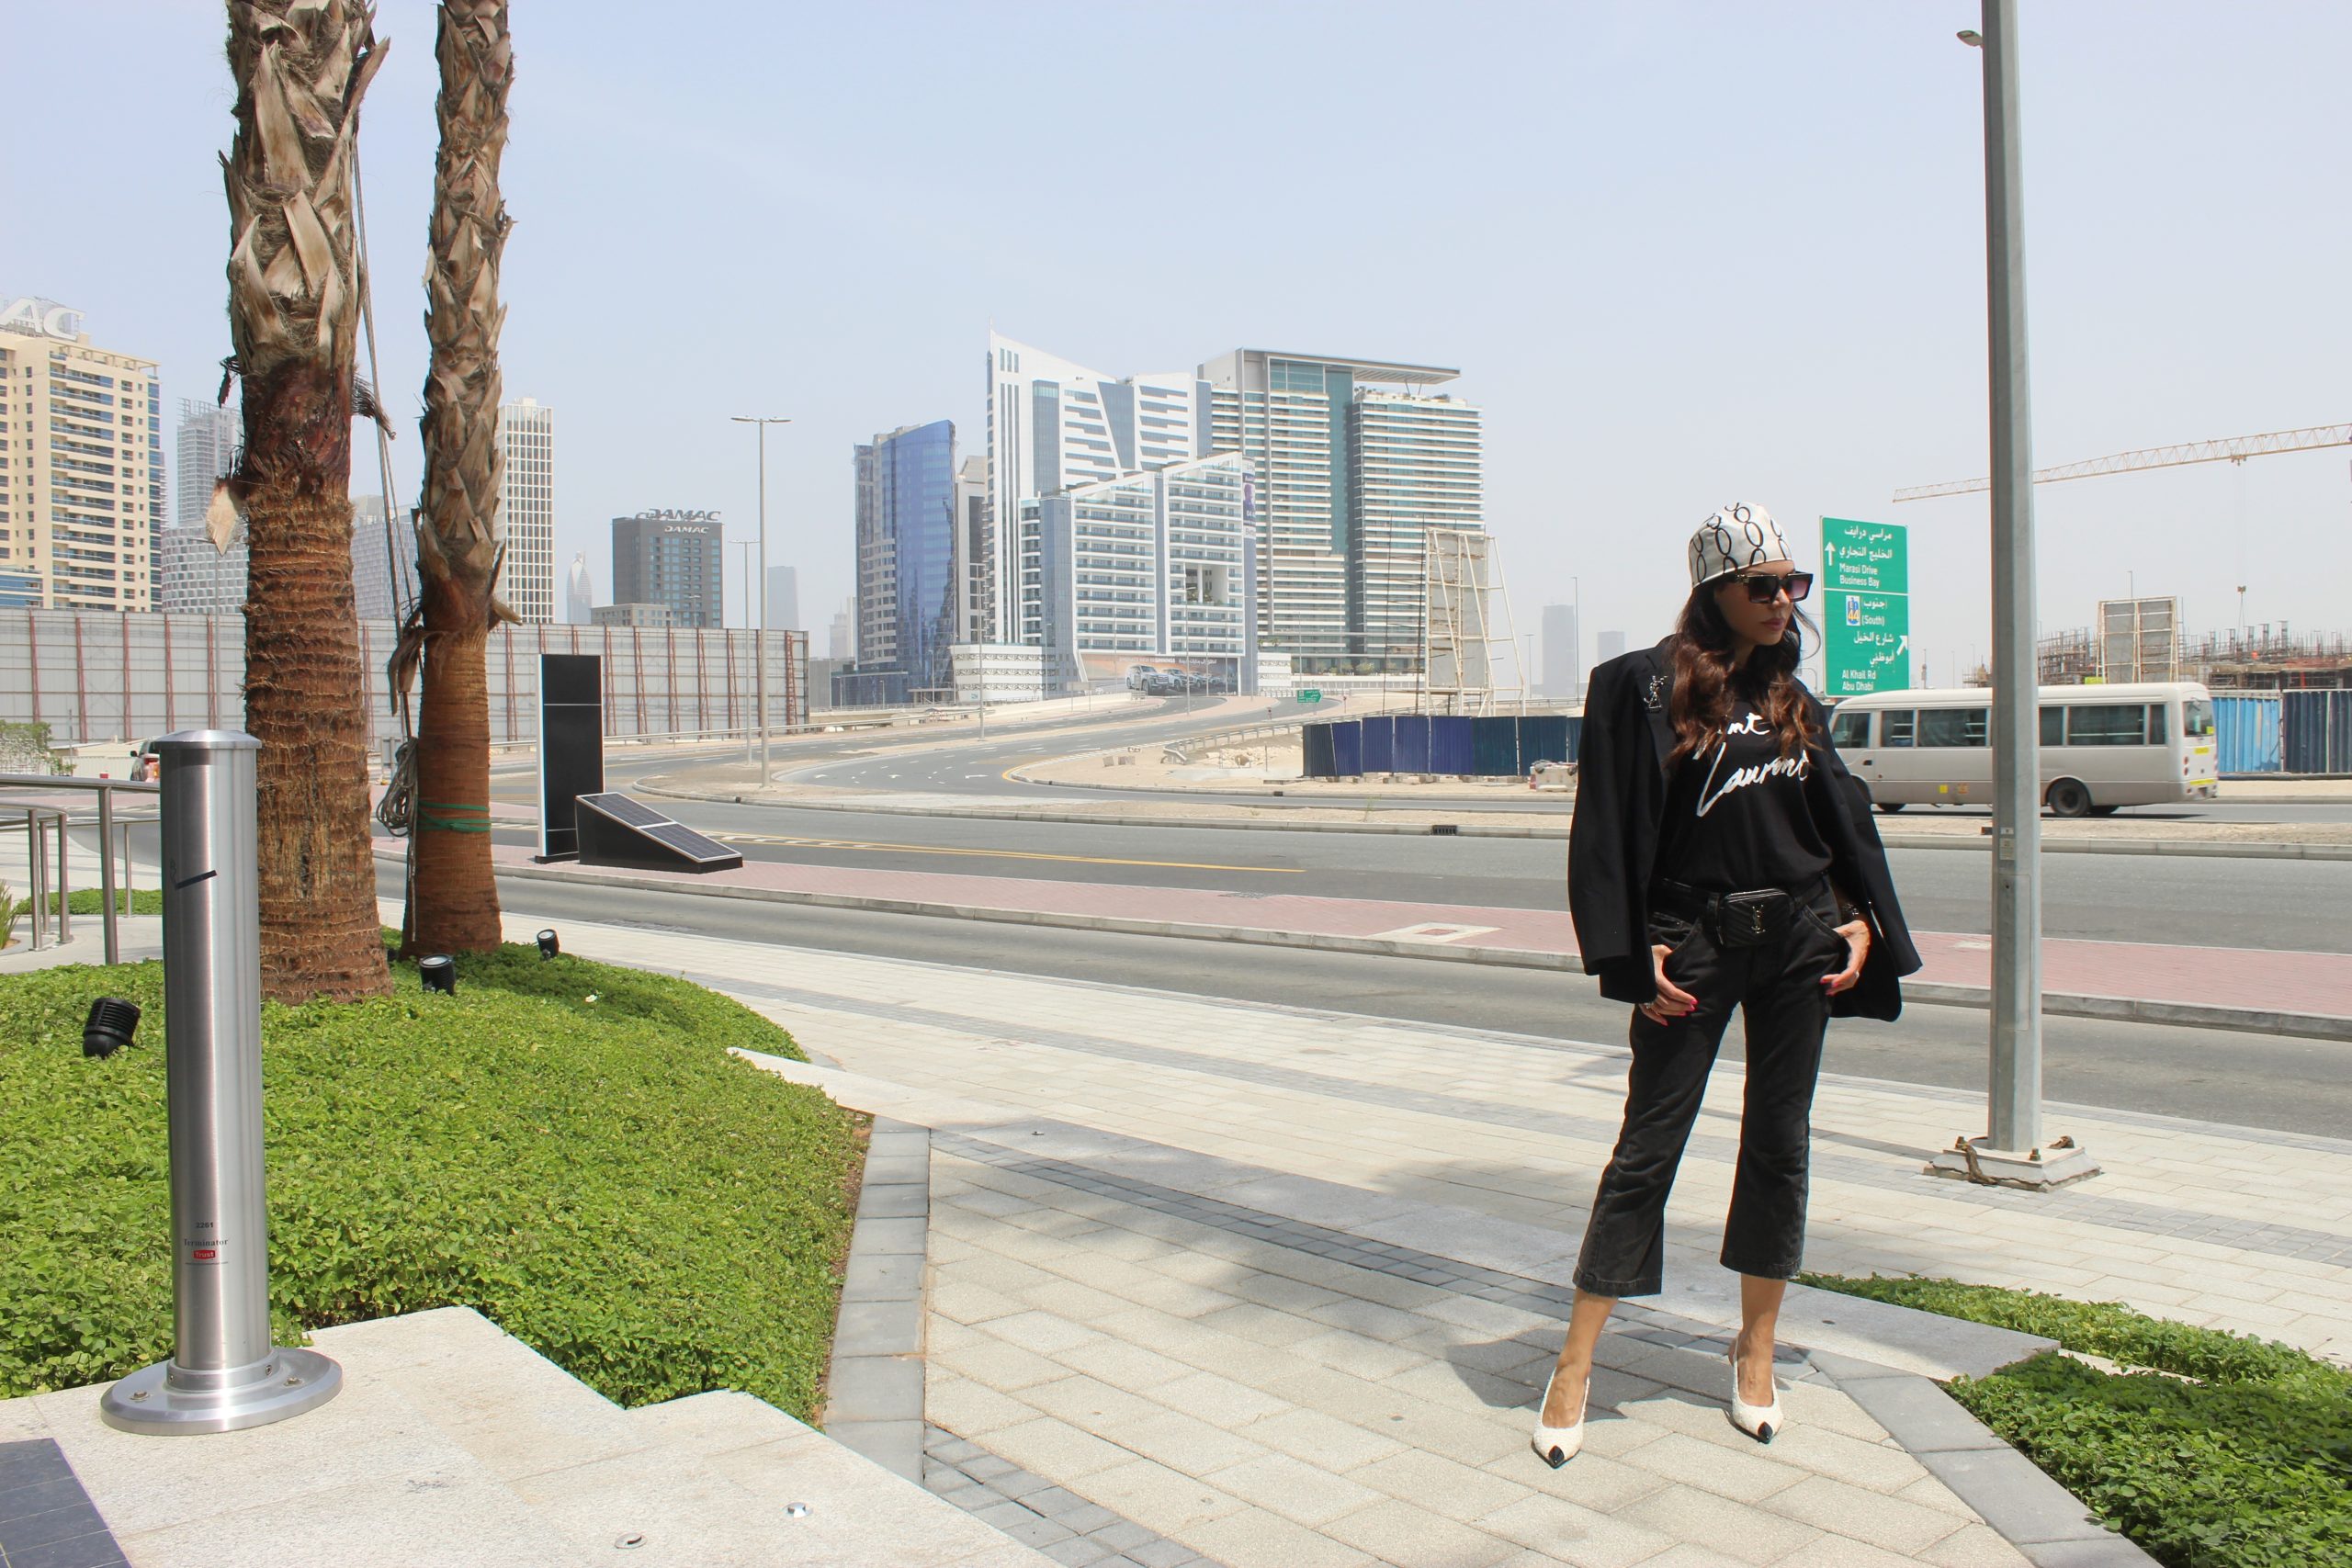 Paramount Hotel - Business Bay - Dubai - United Arab Emirates MAX MARA blazer  ELISABETTA FRANCHI headband DSQUARED2 jeans  SAINT LAURENT t-shirt, belt bag e slingback